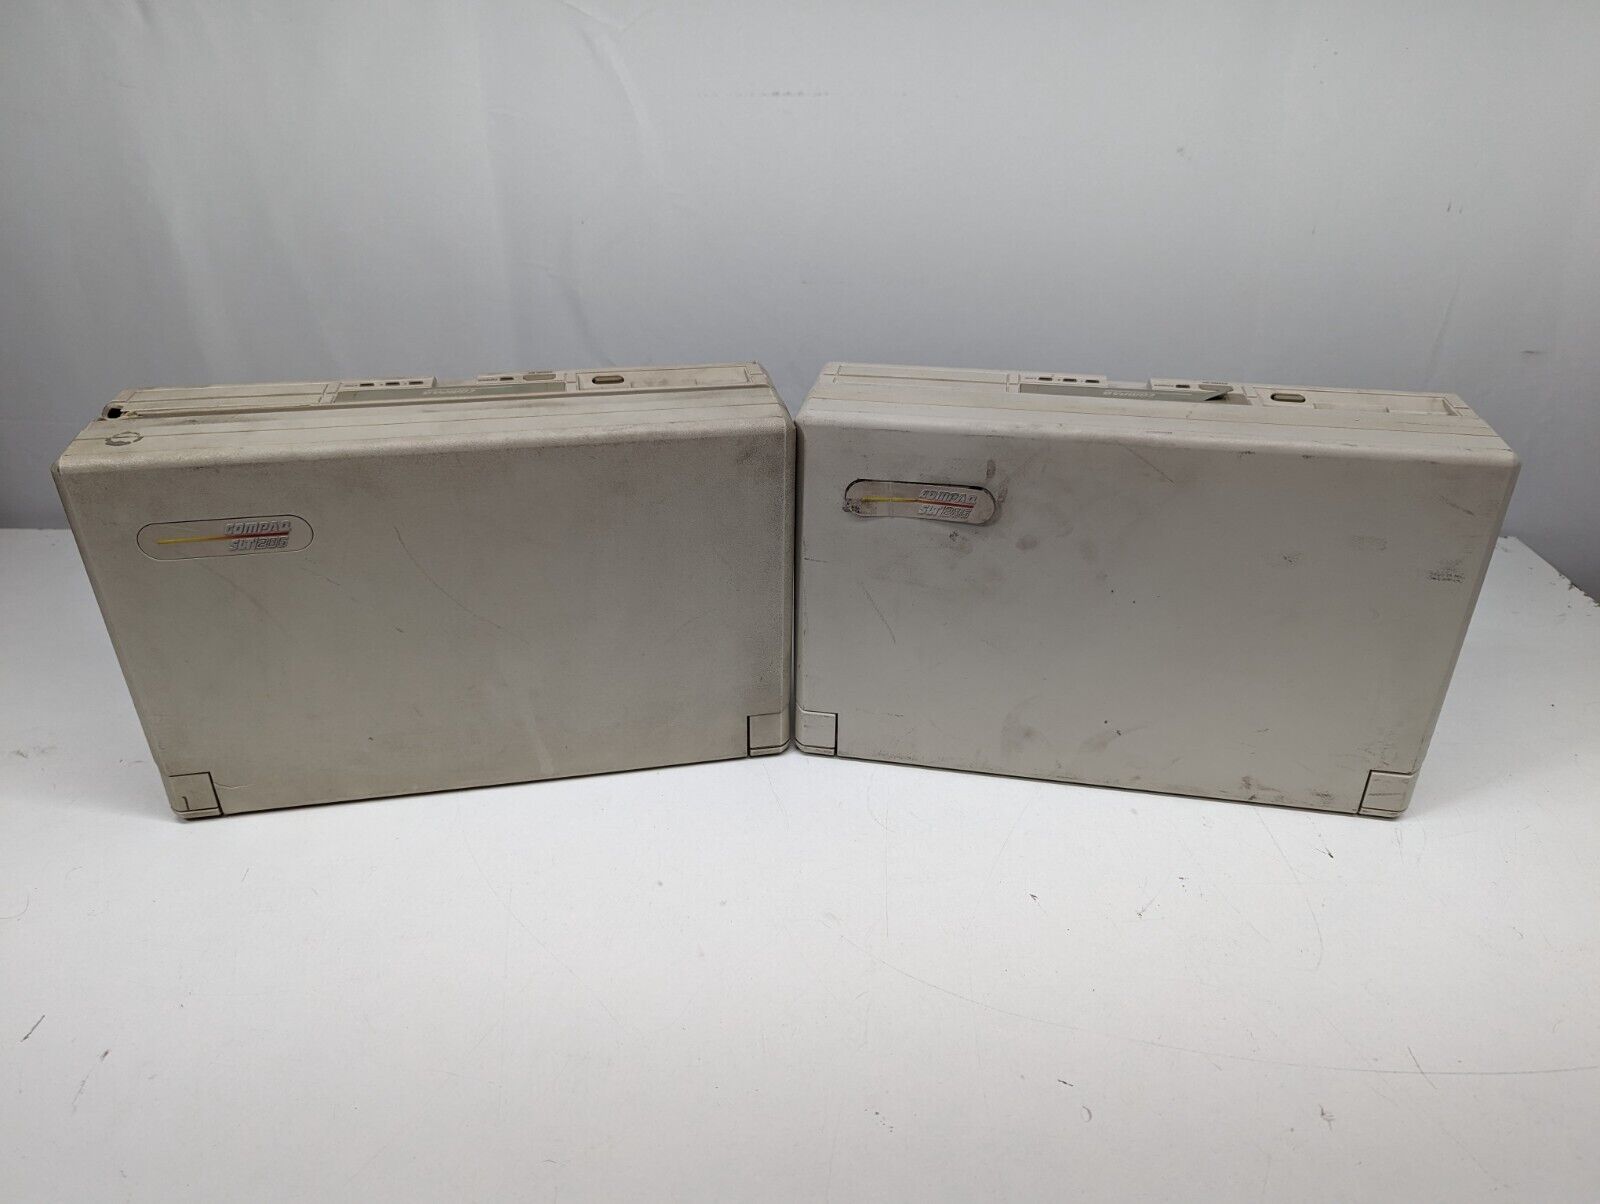 LOT OF 2 - Vintage Compaq SLT/286 Portable Laptop Computer Model 2680 SOLD AS IS